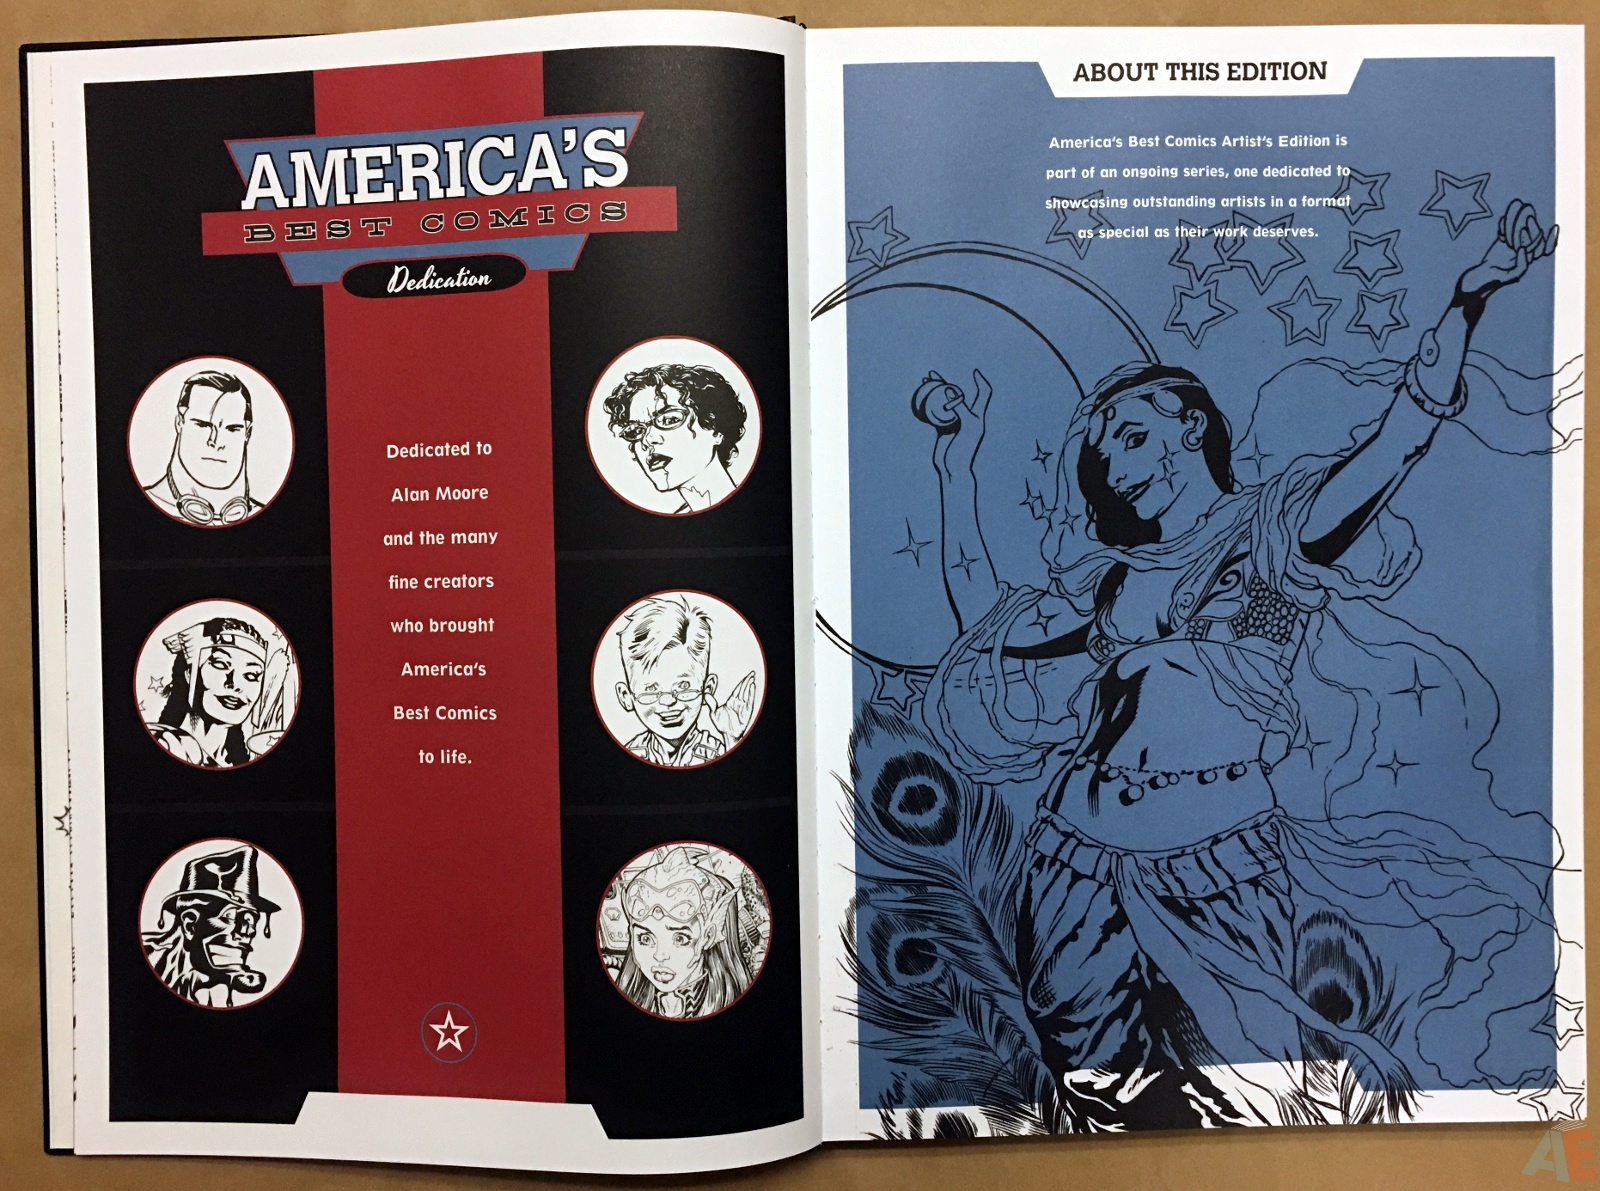 America’s Best Comics Artist’s Edition